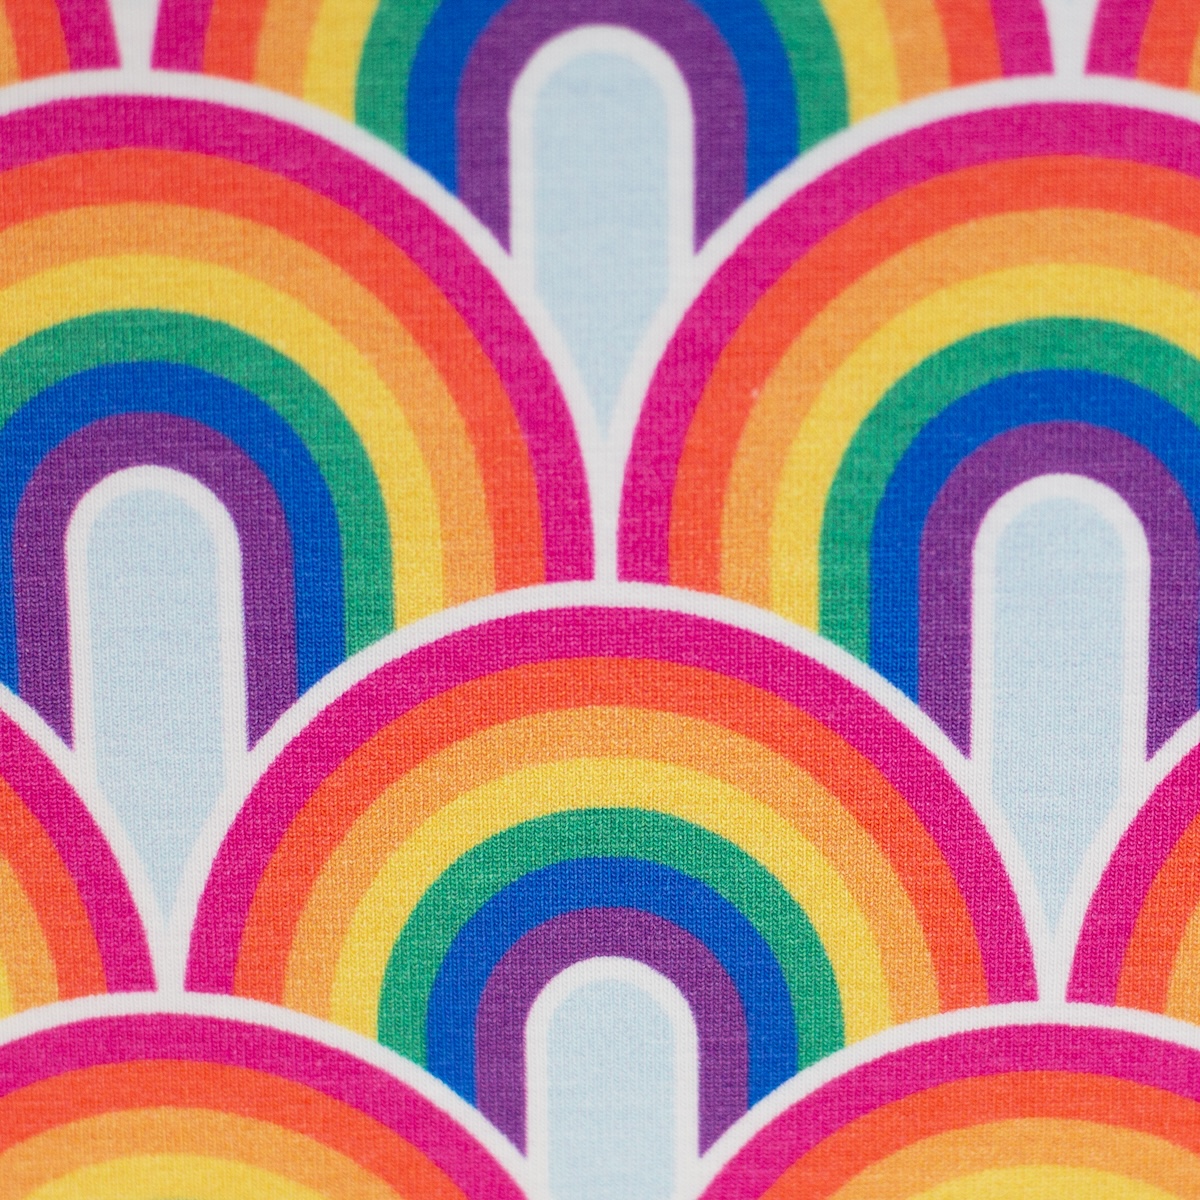 Baumwolljersey - Rainbows bunt by lycklig design - Meterware (0,5m)